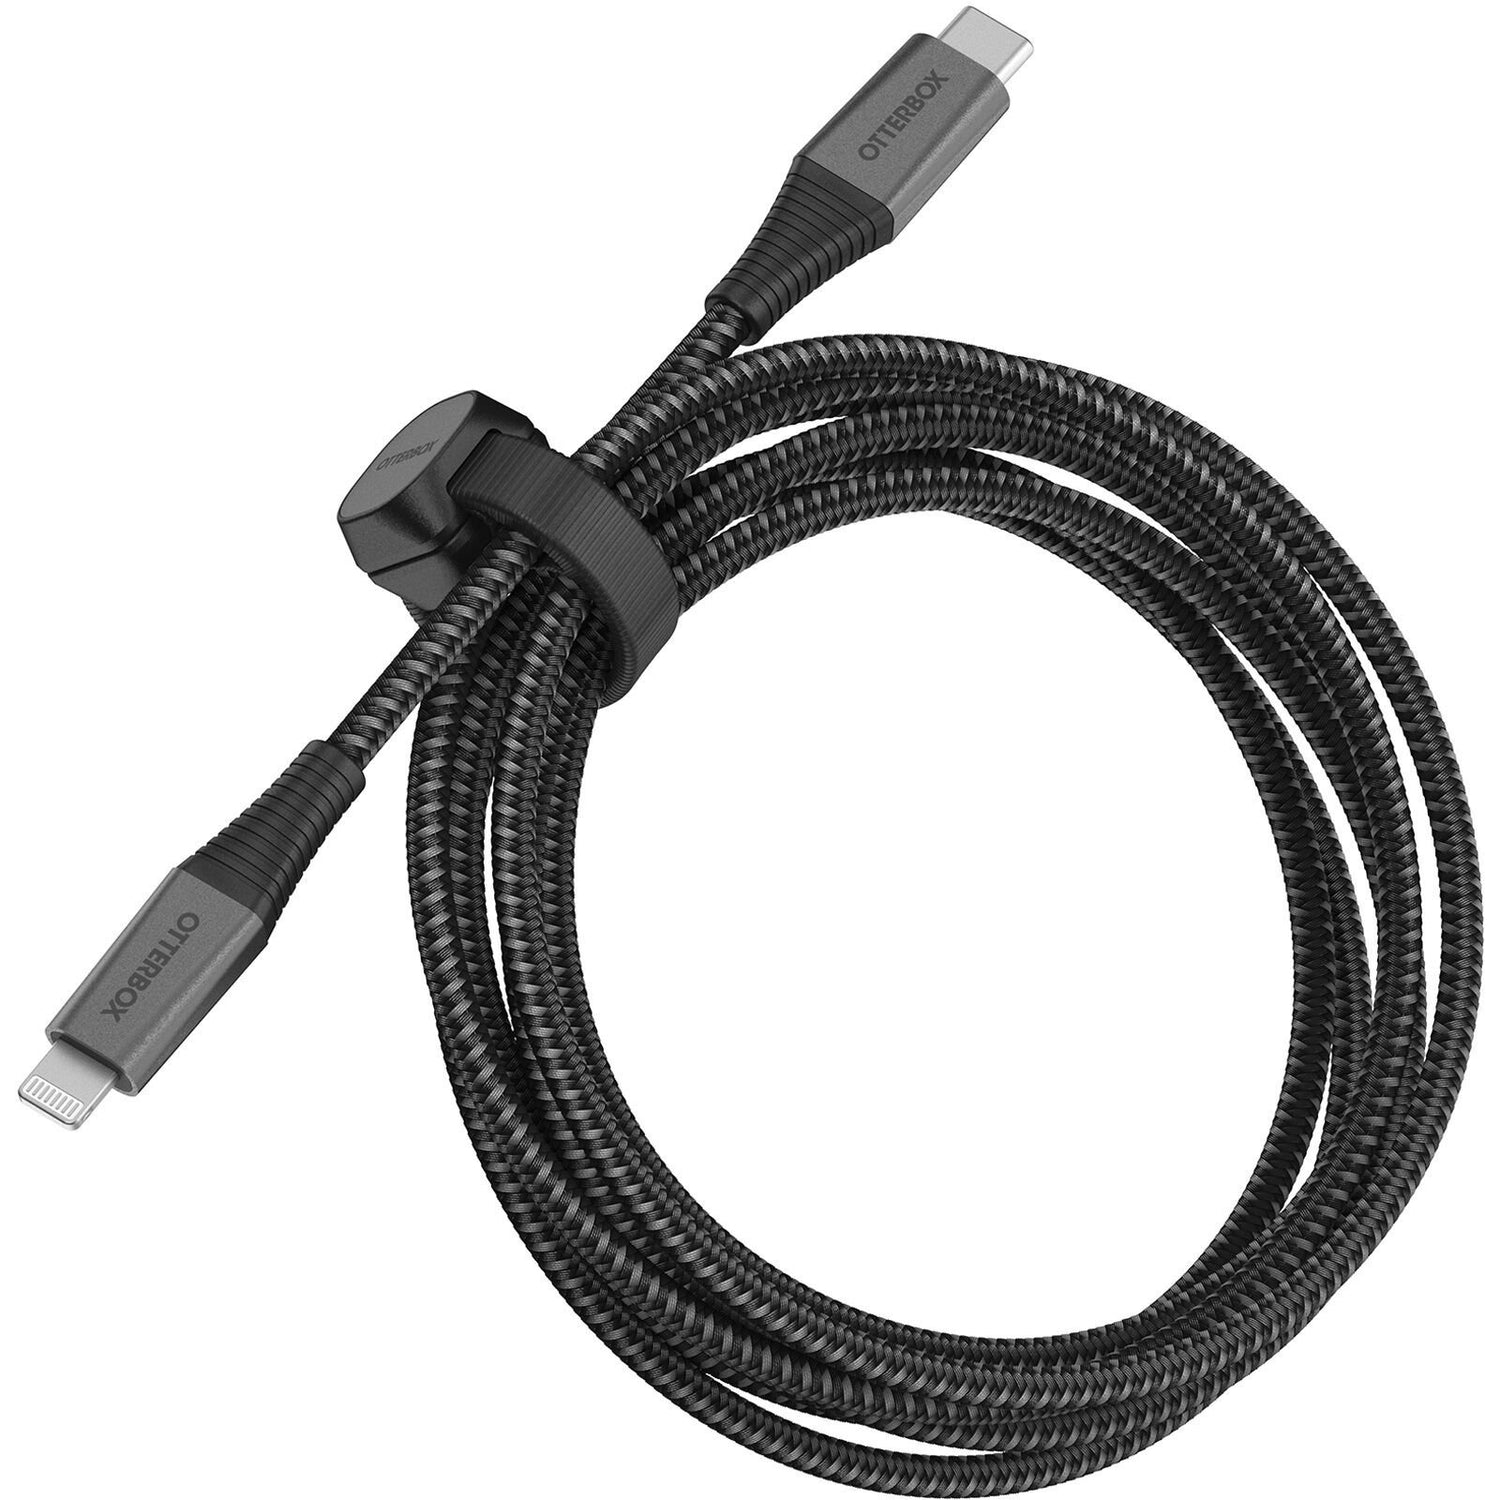 usb-c cable black 3.3ft